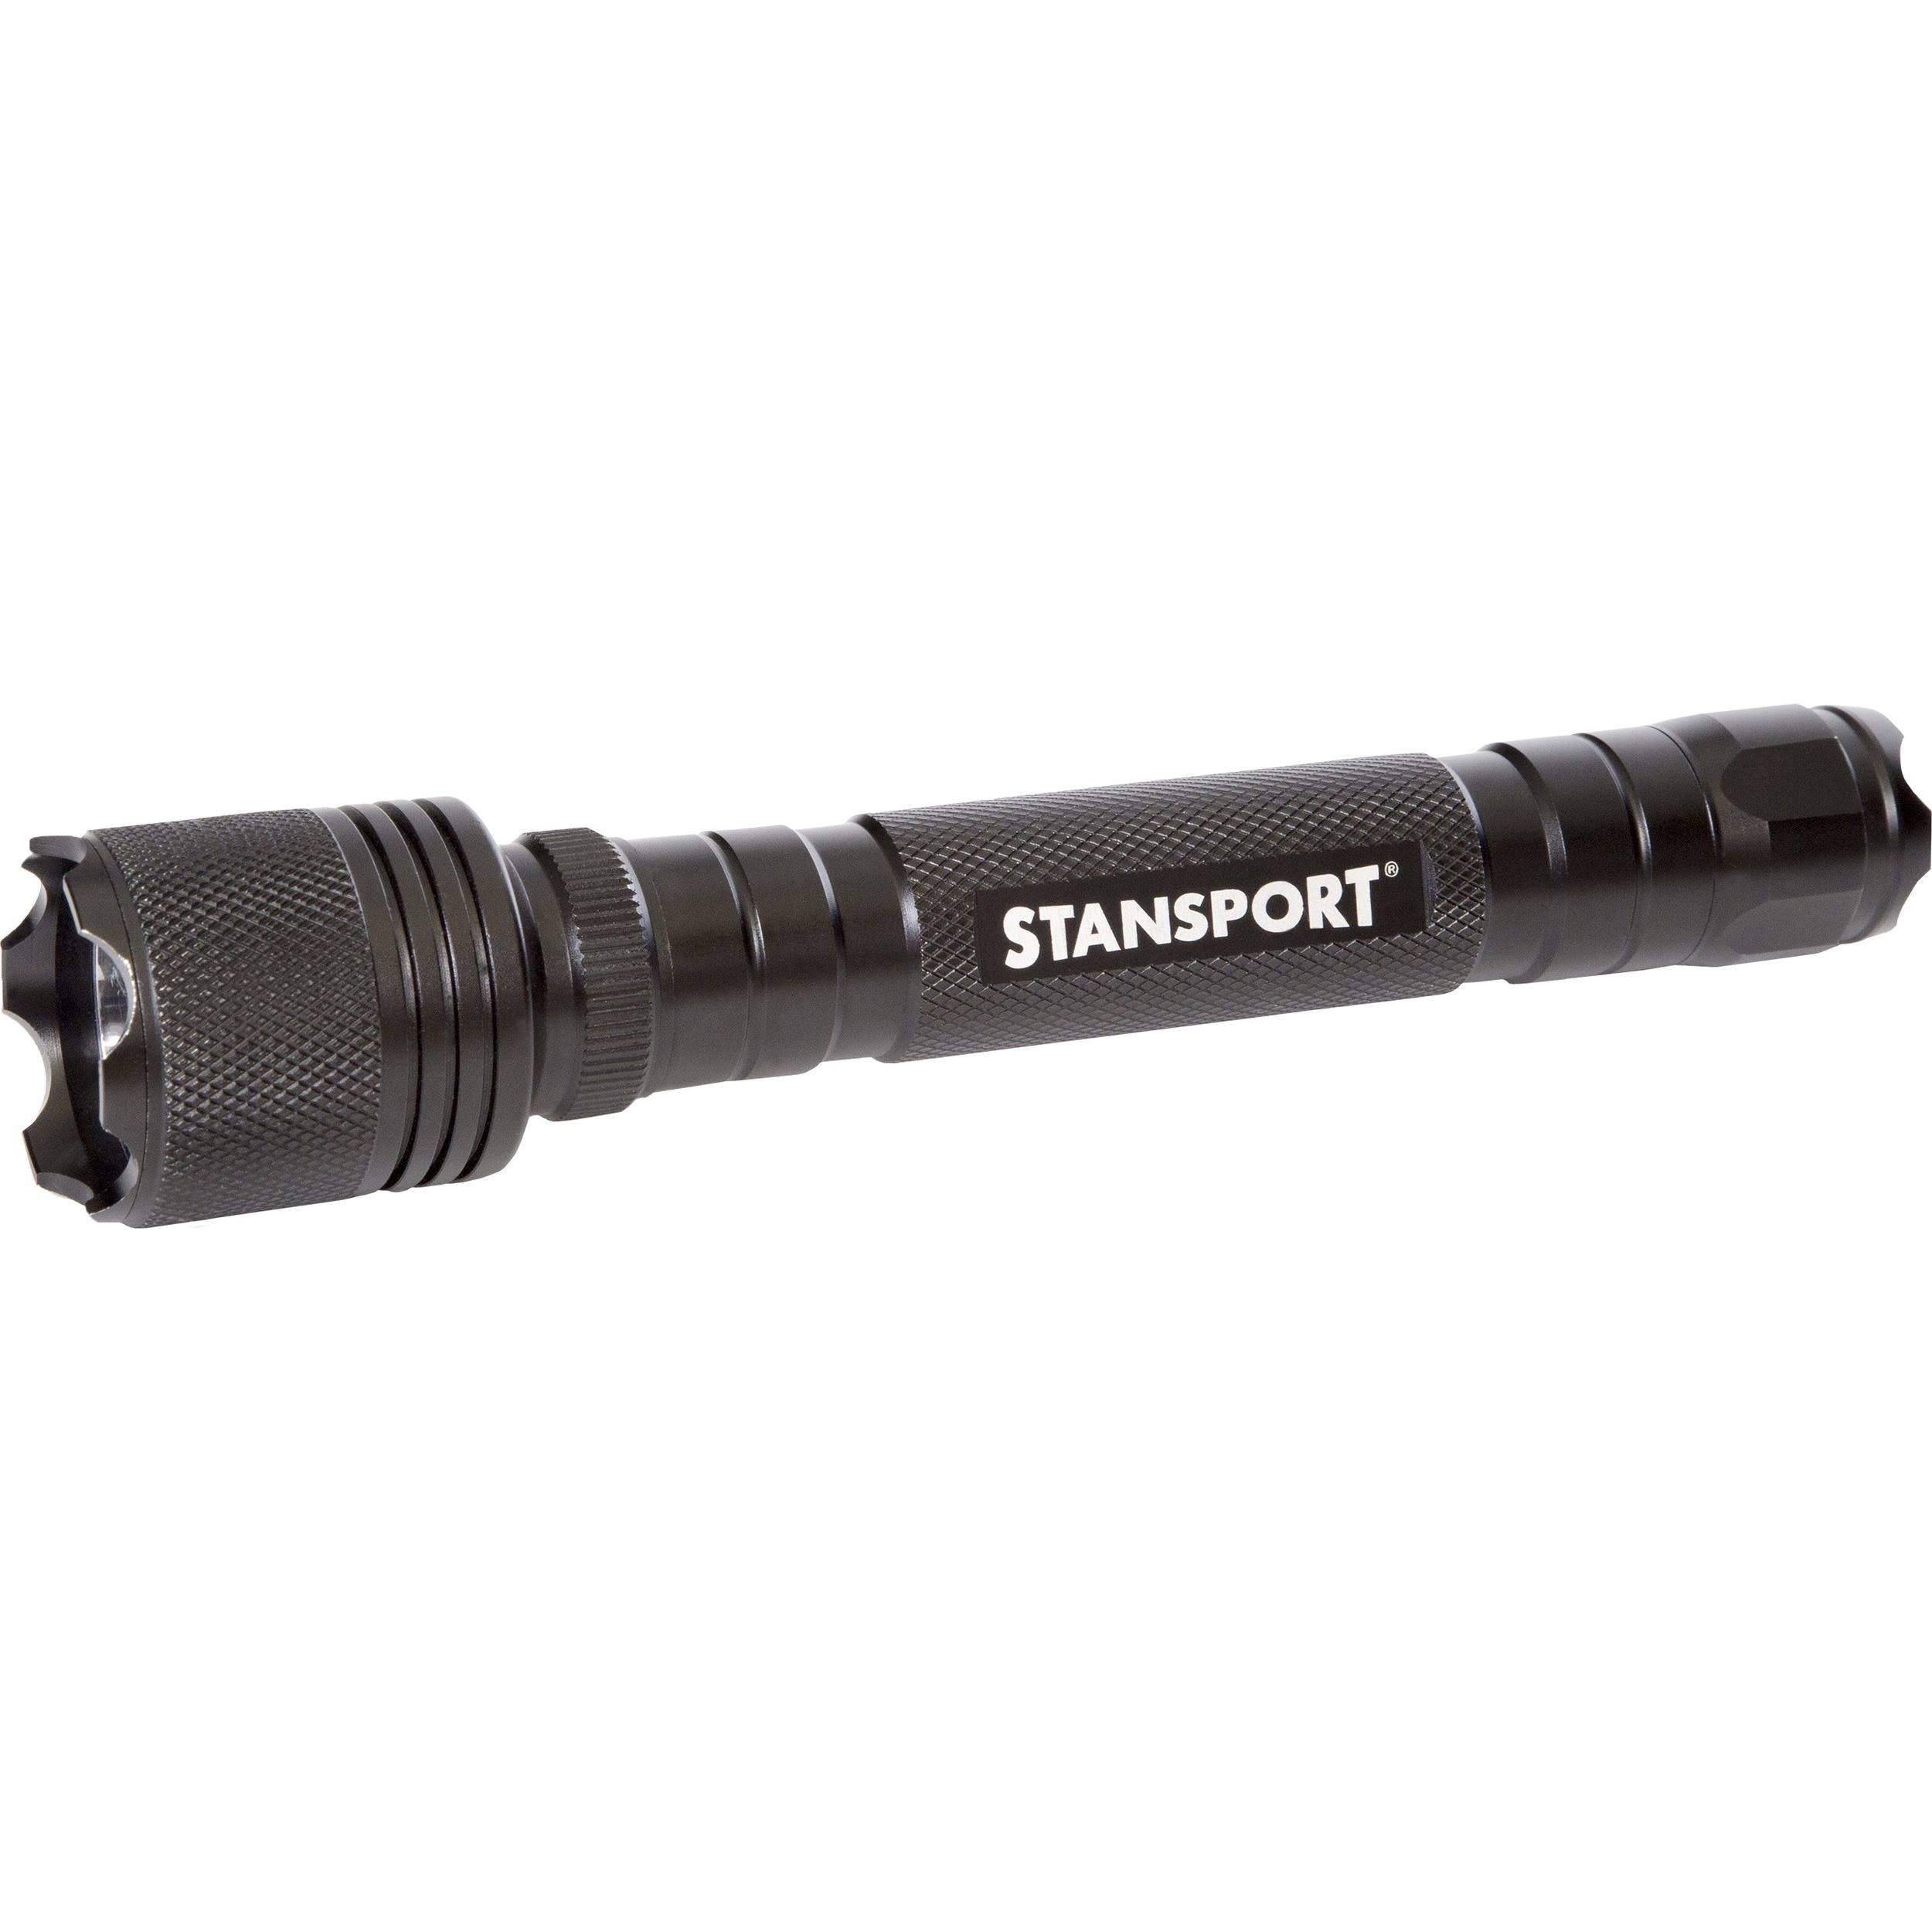 Stansport Heavy Duty Tactical Flashlight 500 Lumens - Default Title